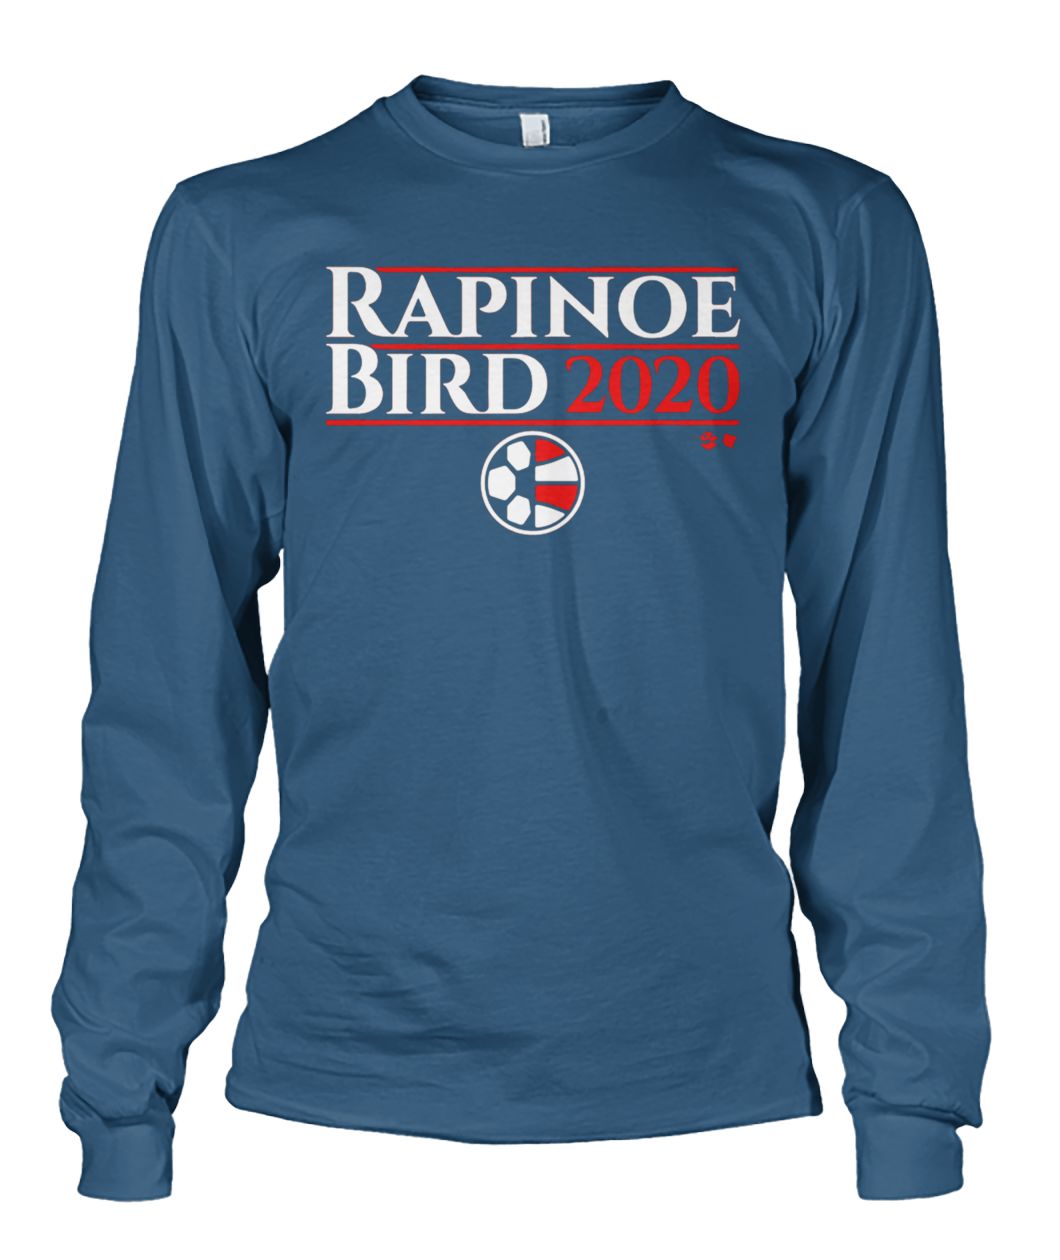 Rapinoe bird 2020 megan rapinoe unisex long sleeve